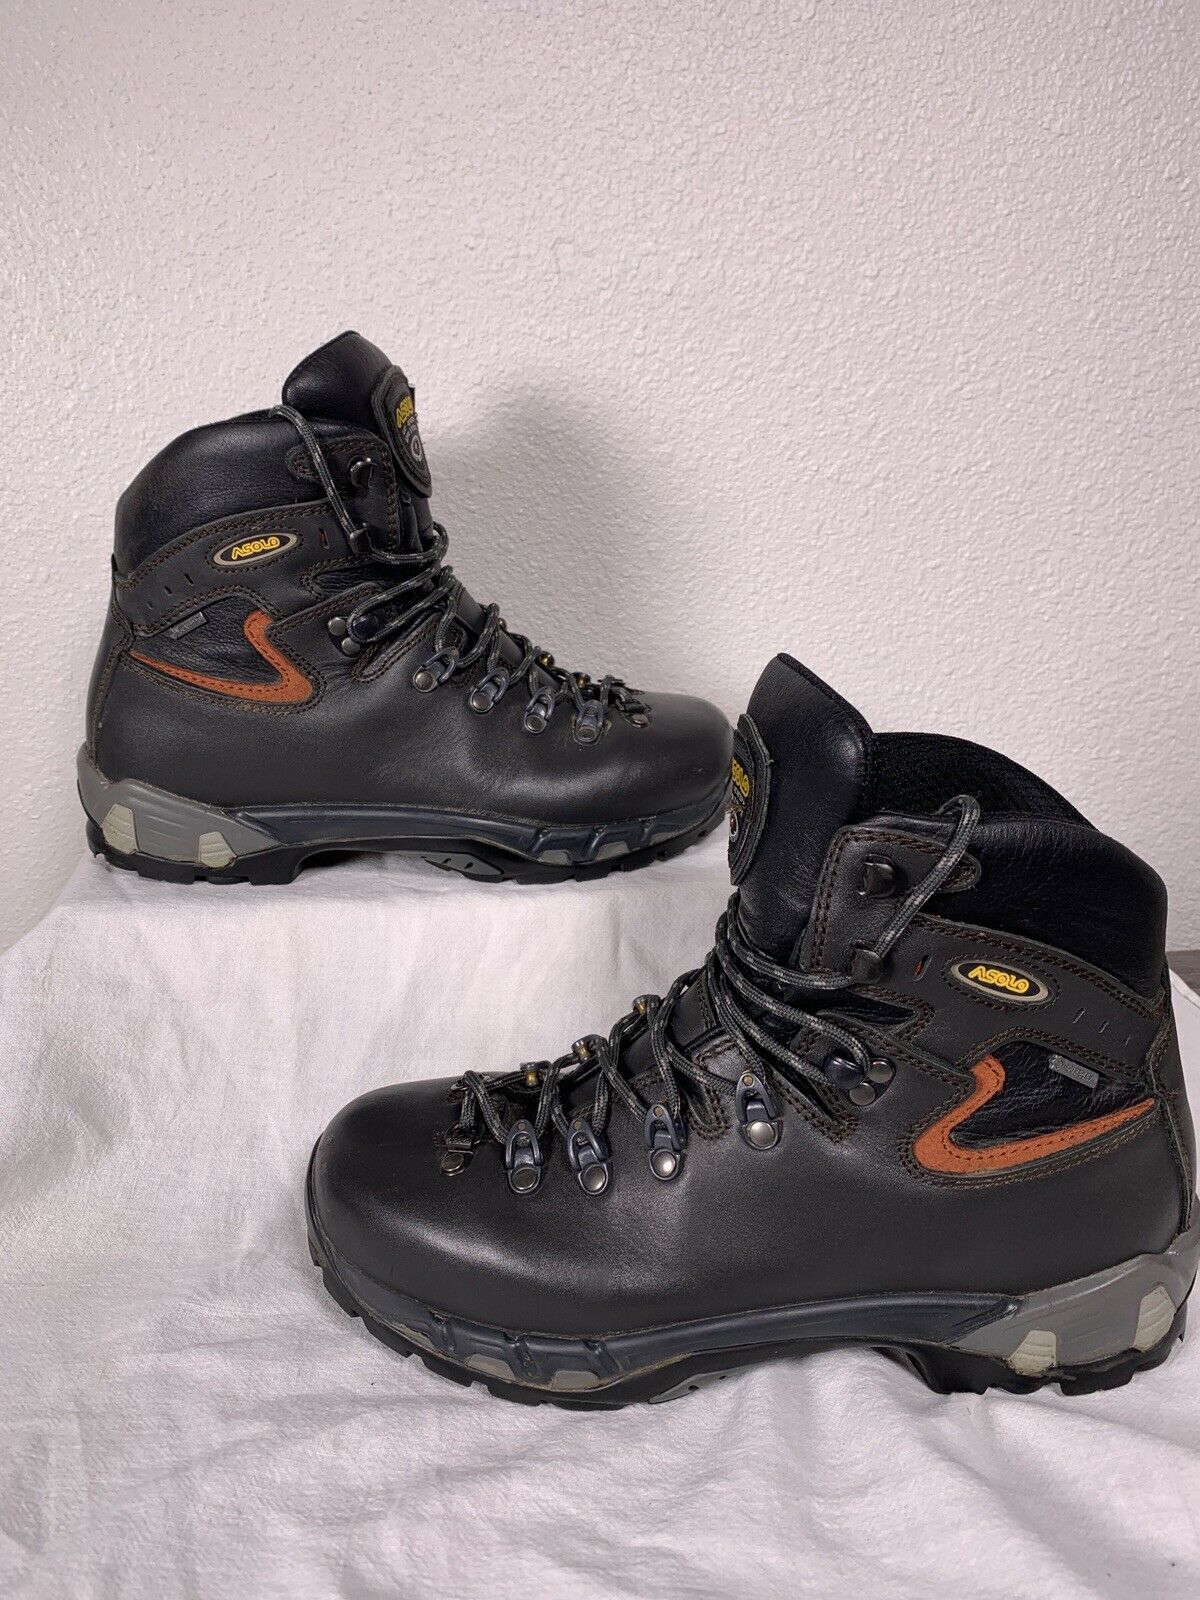 Asolo Men's Power Matic 200 GV Gore-Tex Waterproof Hiking Boot Size 8 US